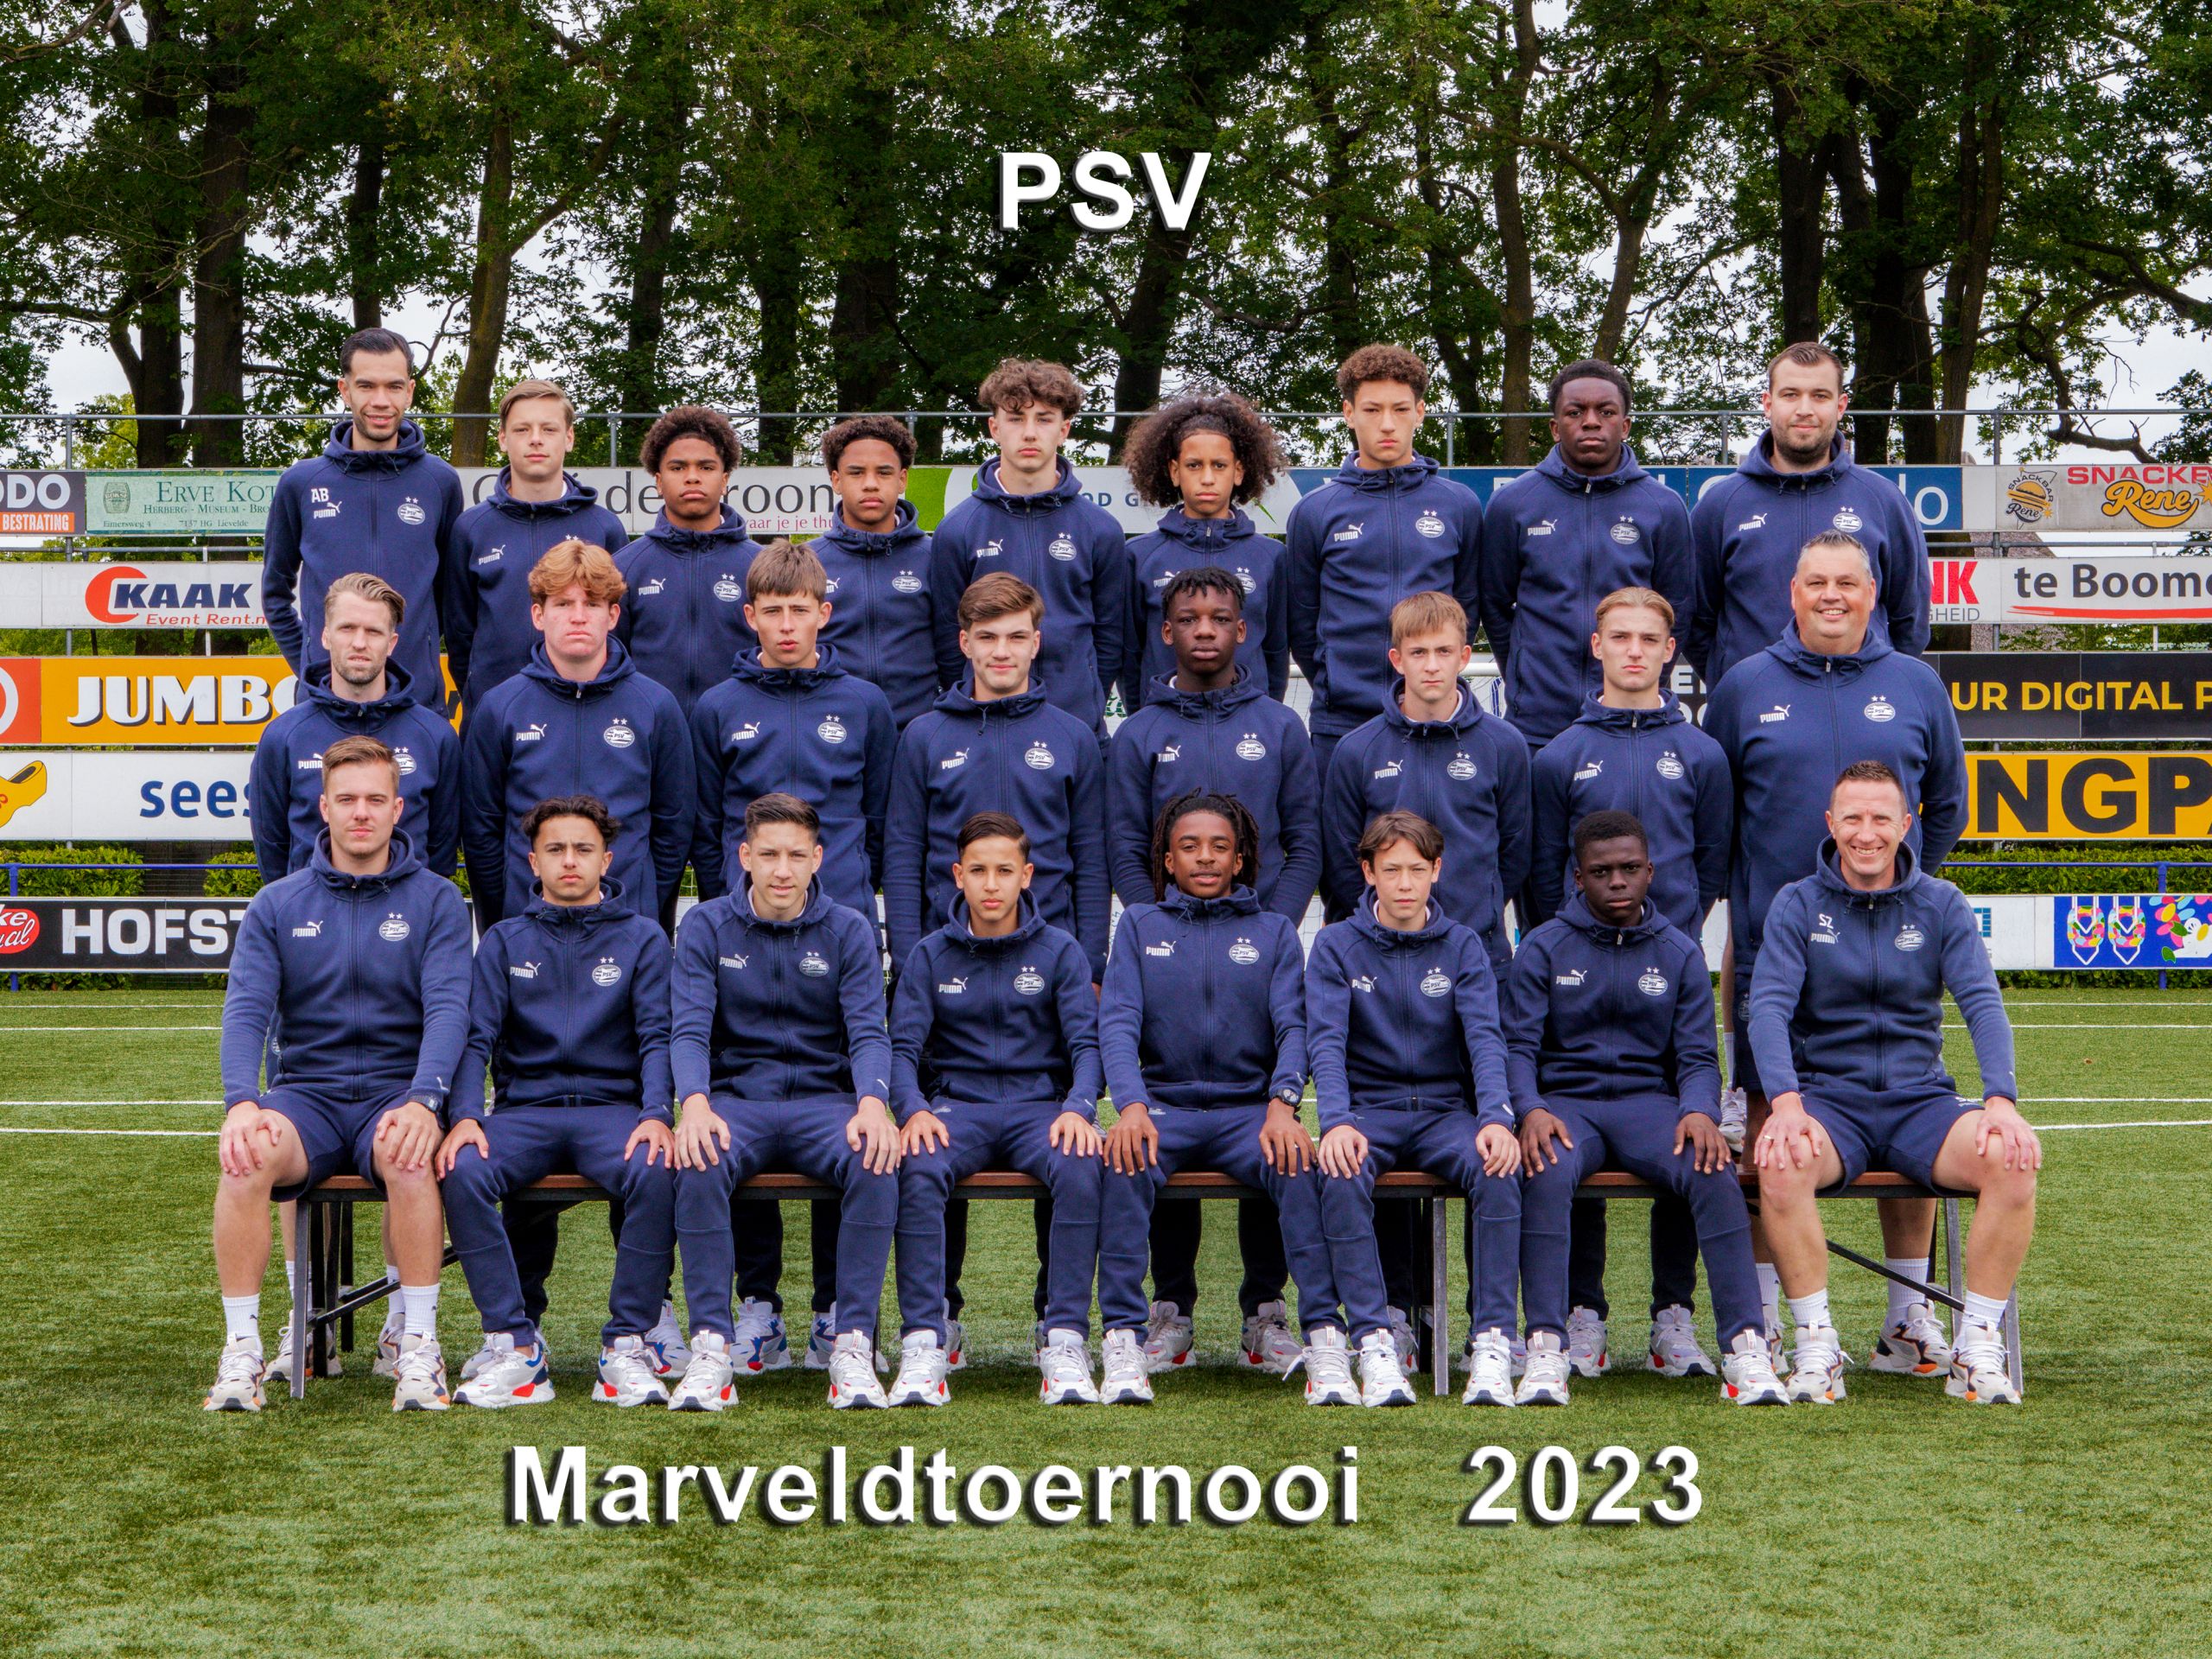 Marveld Tournament 2023 - Team PSV